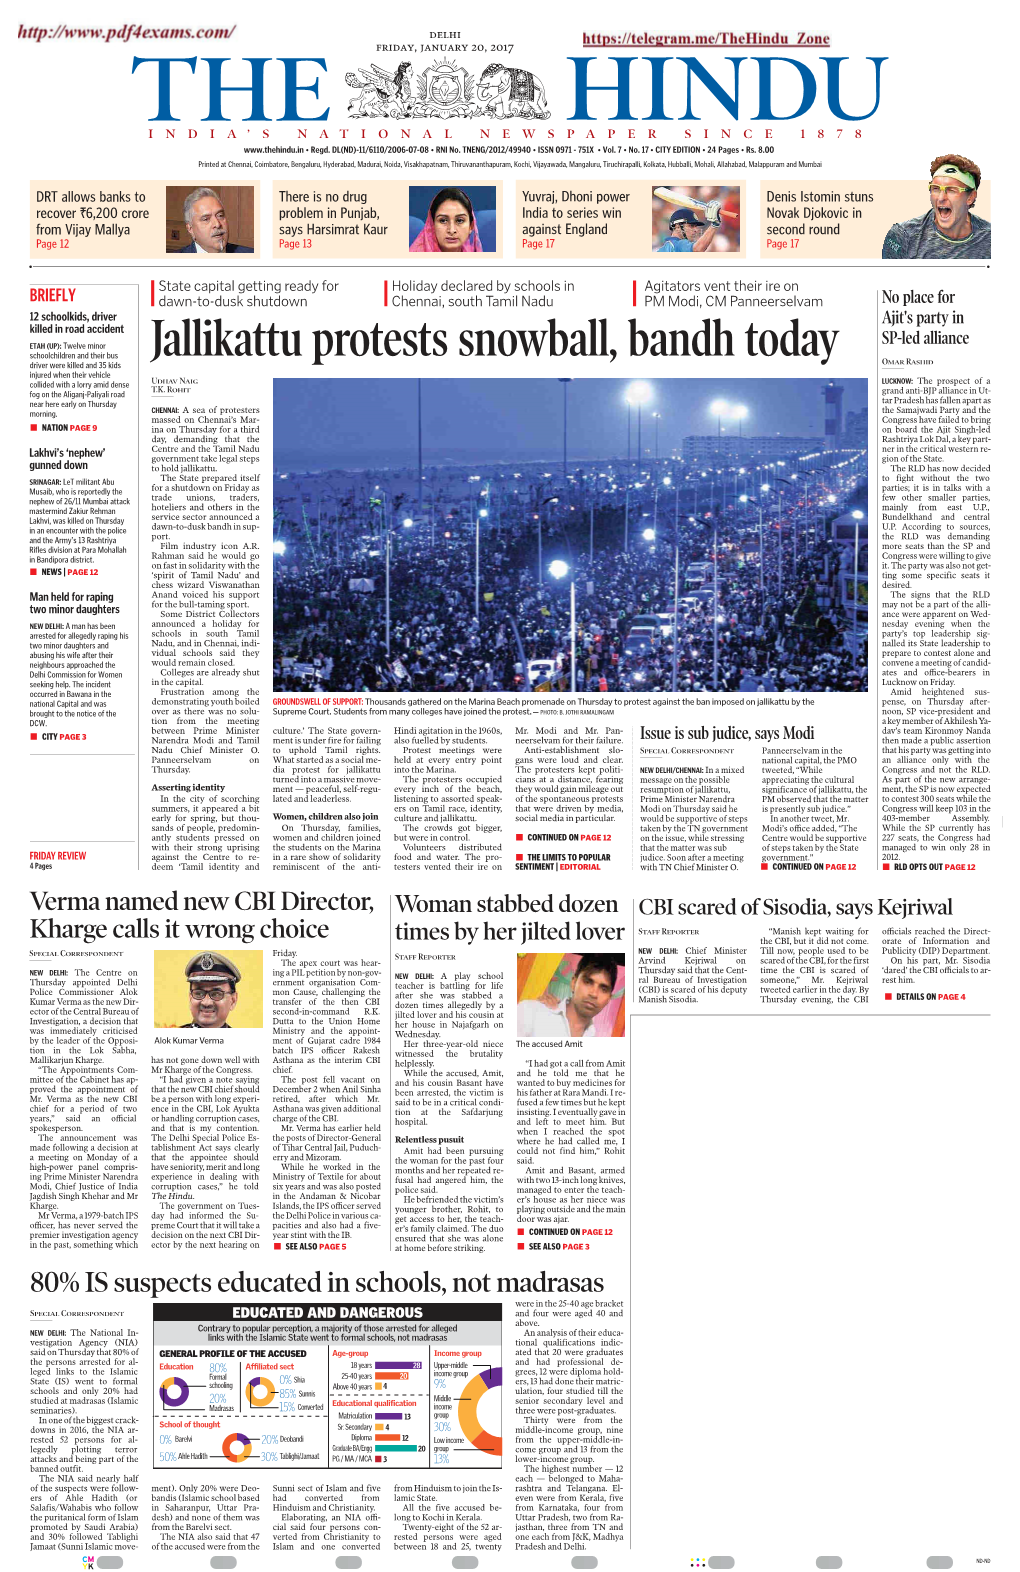 Jallikattu Protests Snowball, Bandh Today